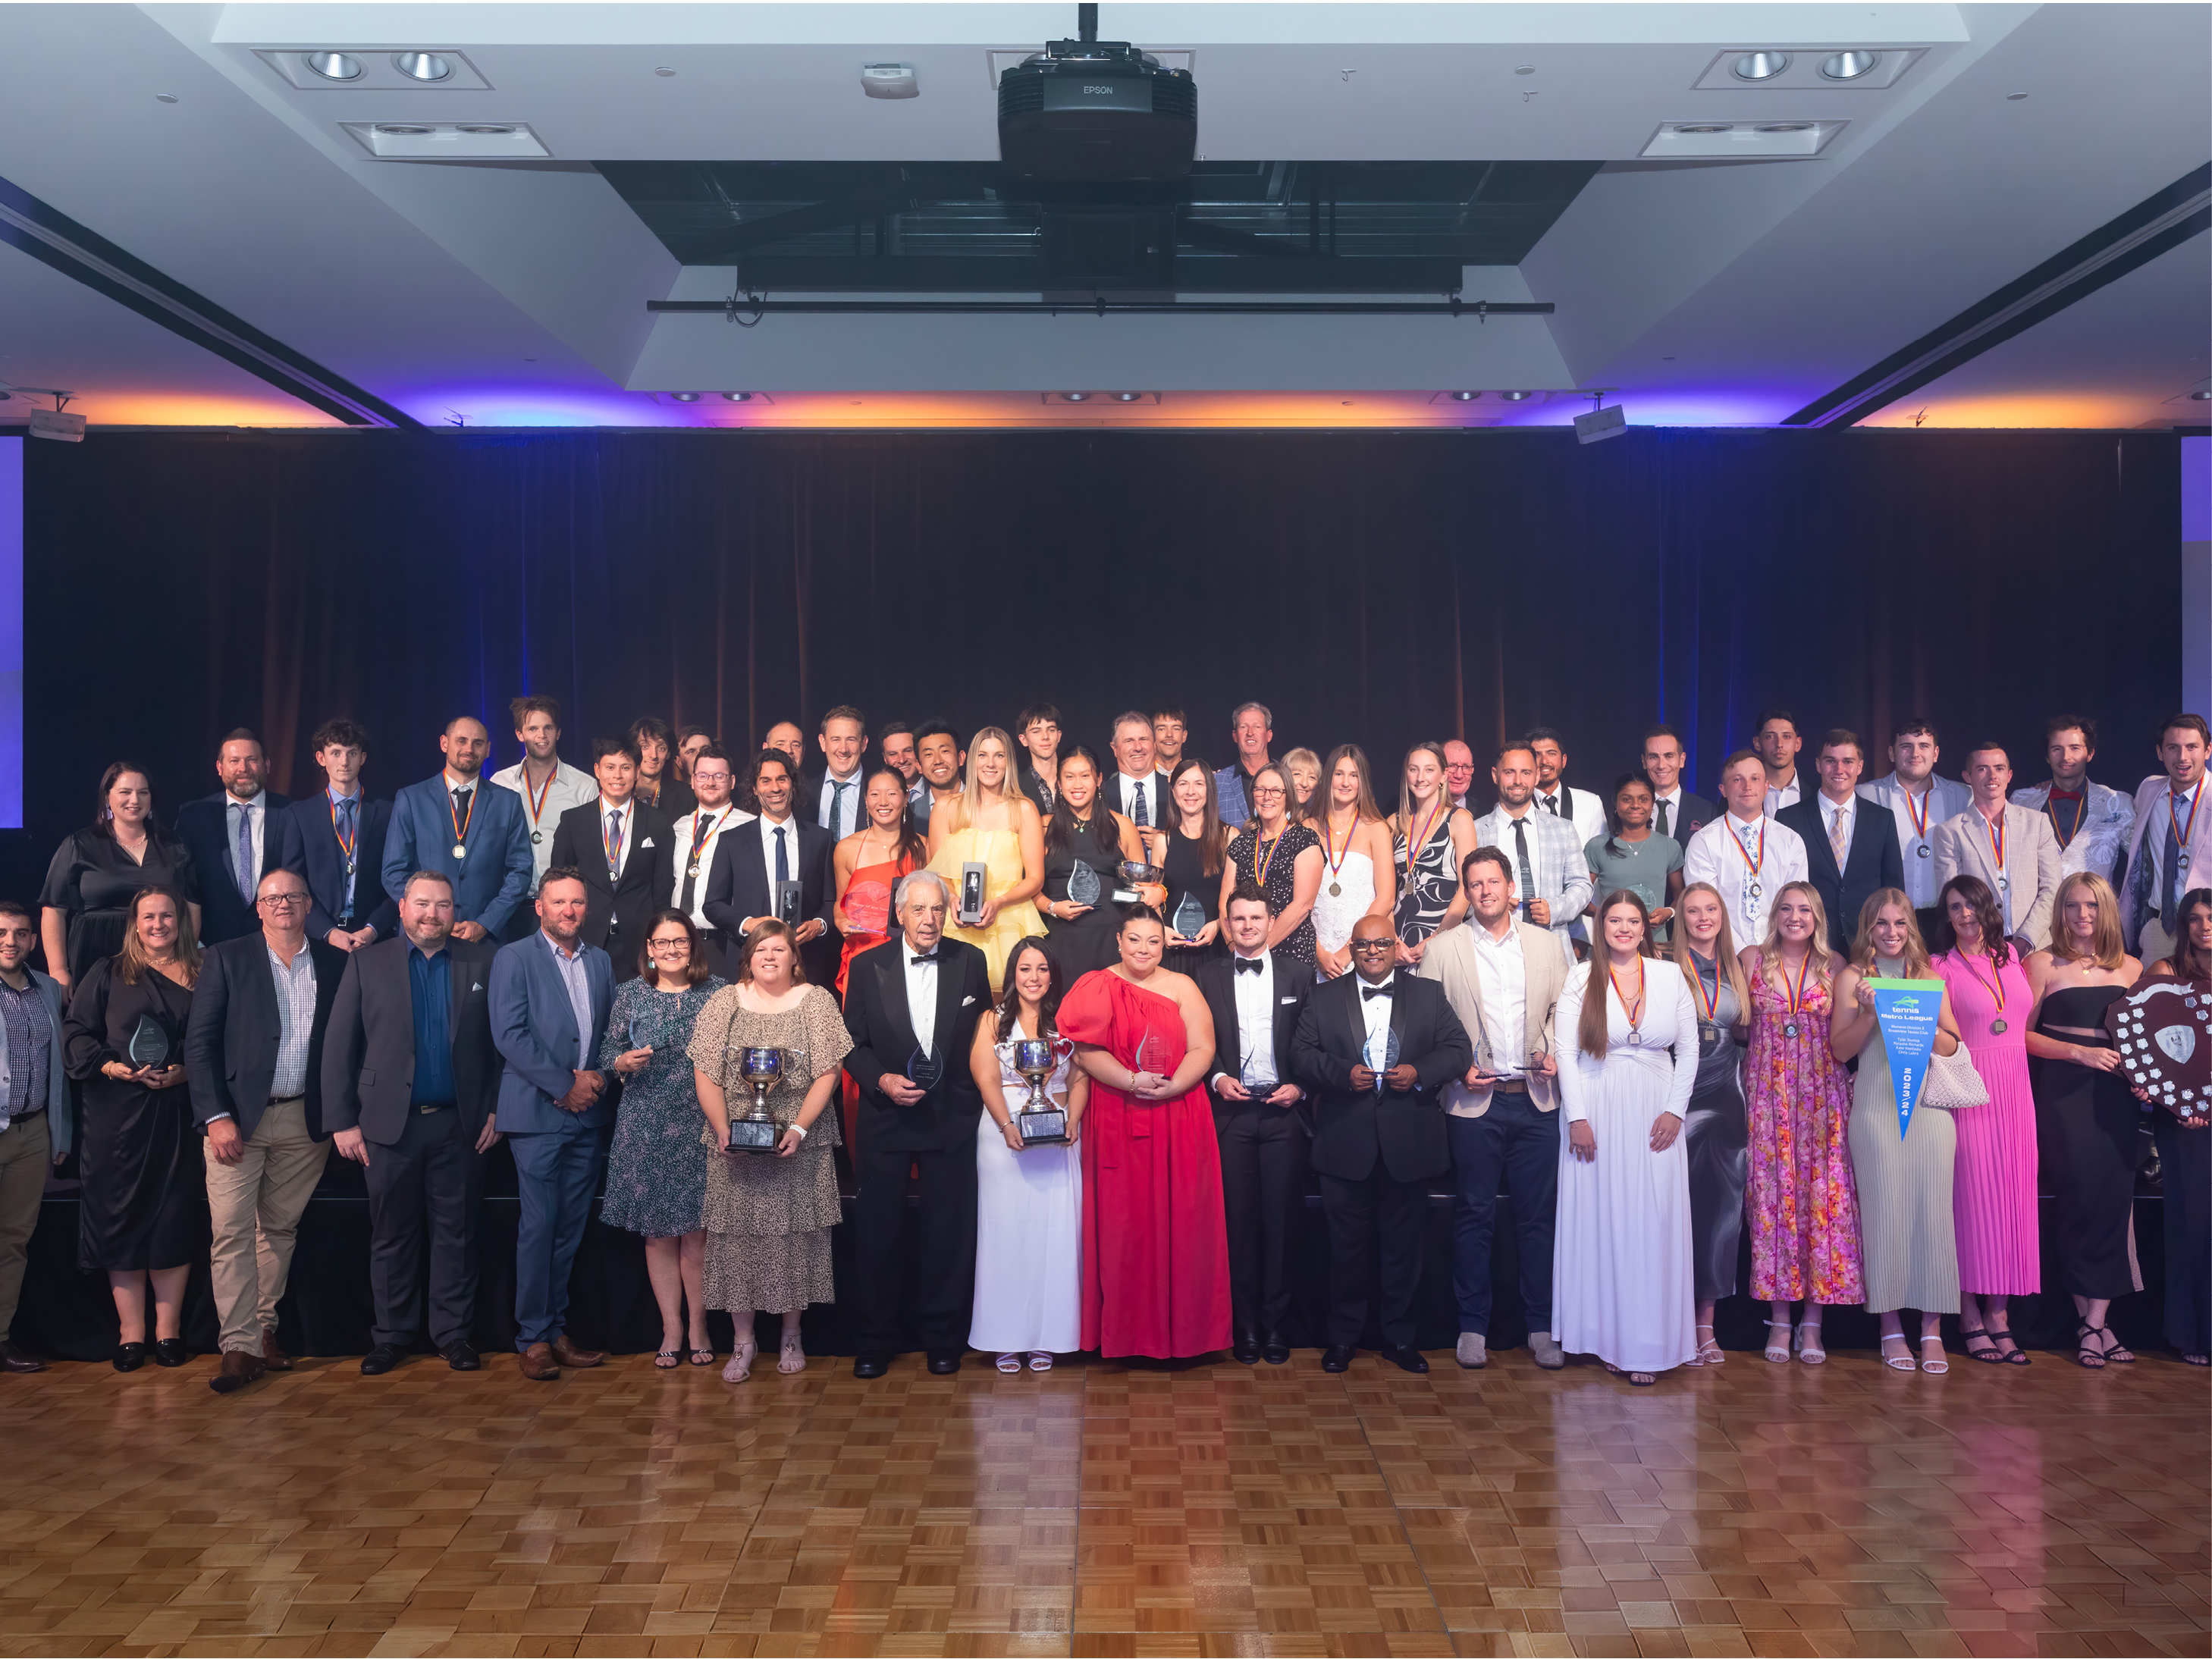 Tennis SA Awards Night celebrates South Australian tennis community